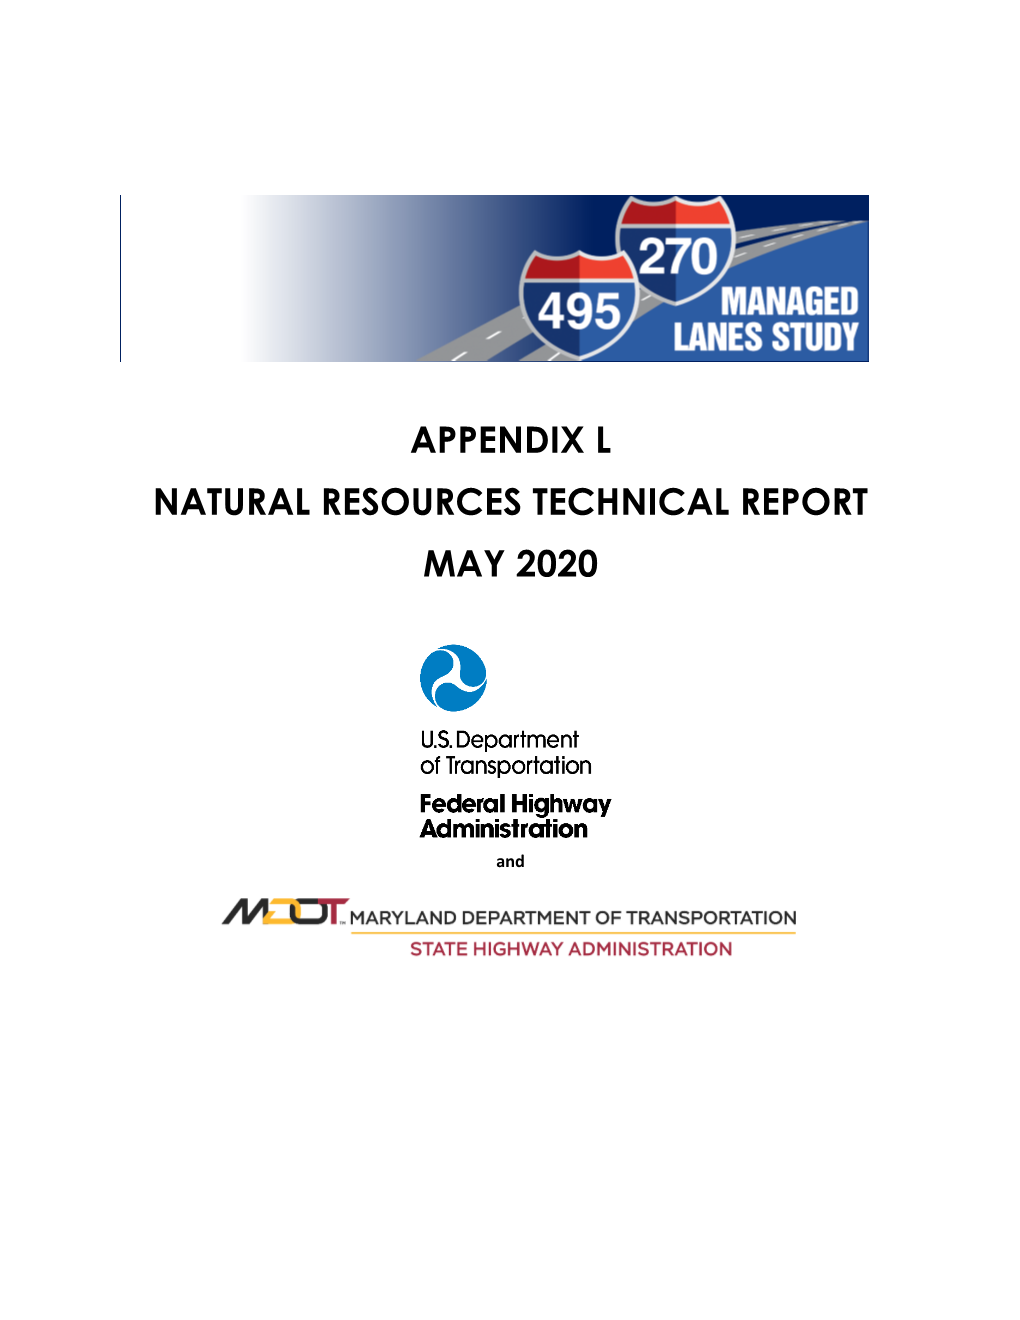 Appendix L Natural Resources Technical Report May 2020